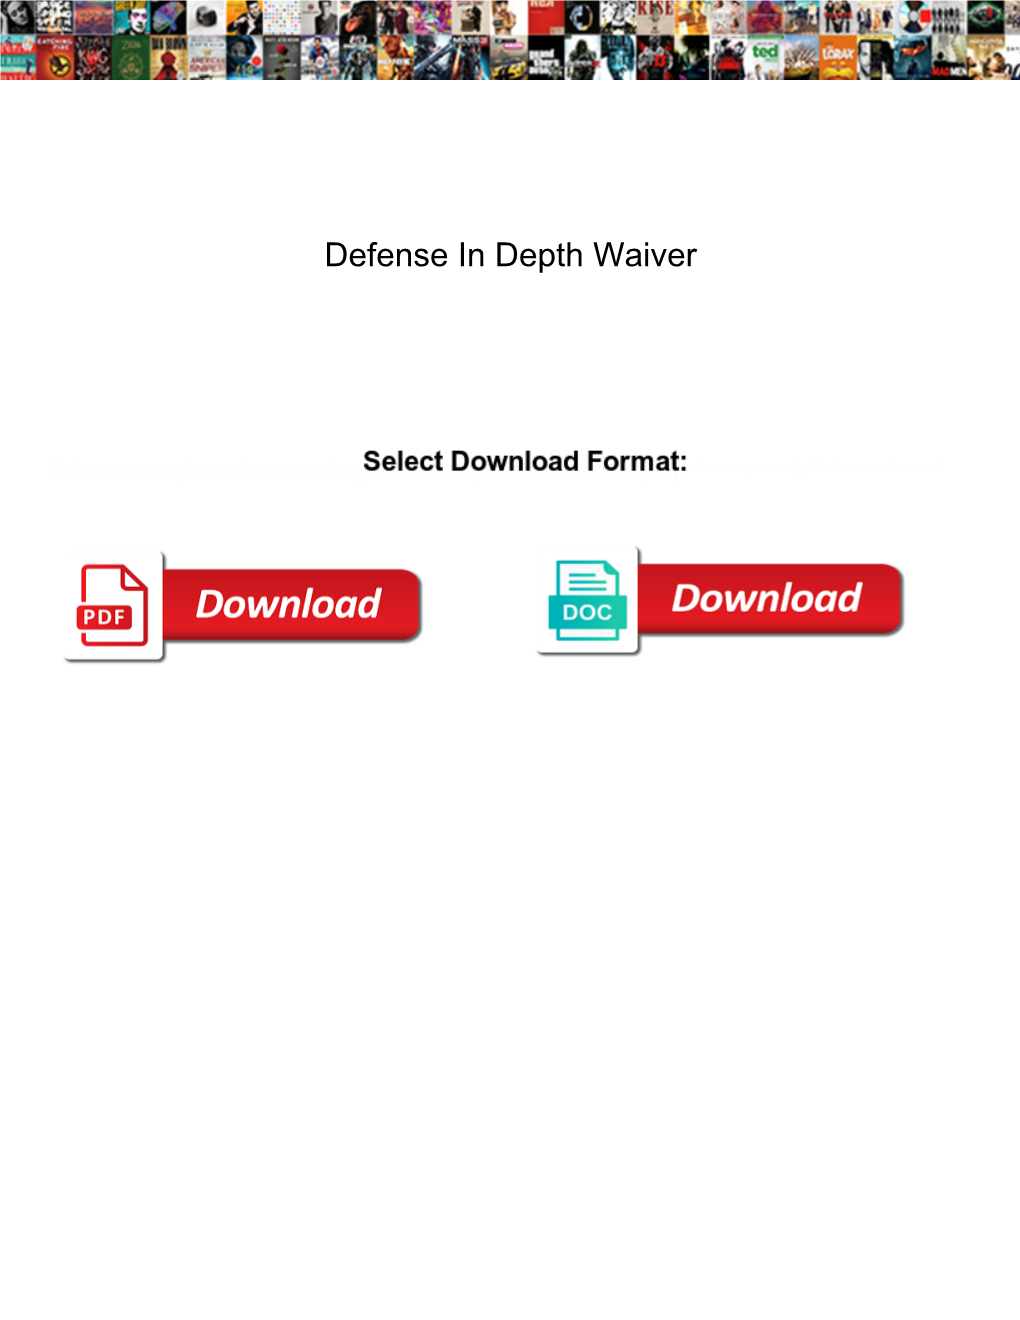 Defense in Depth Waiver